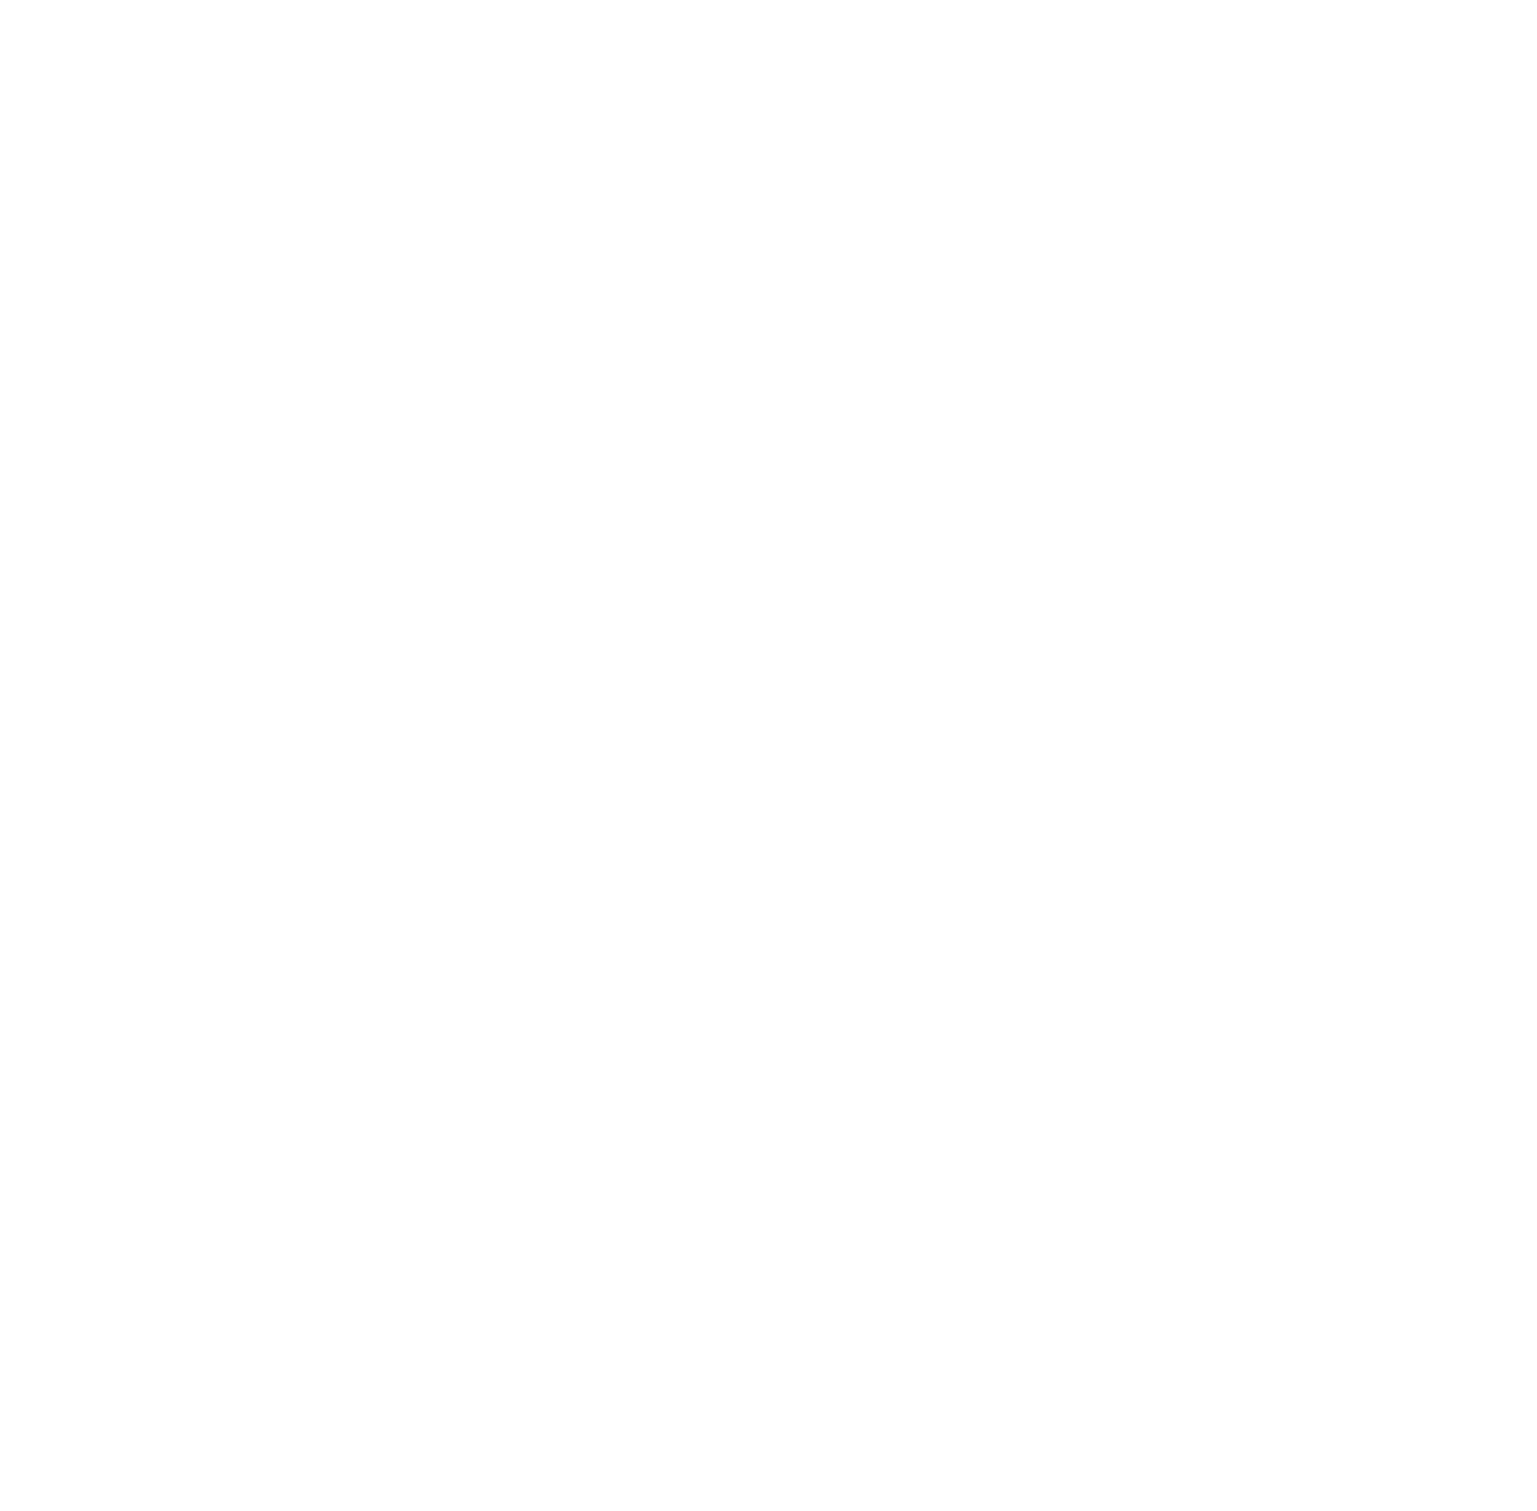 Loma Negra logo pour fonds sombres (PNG transparent)